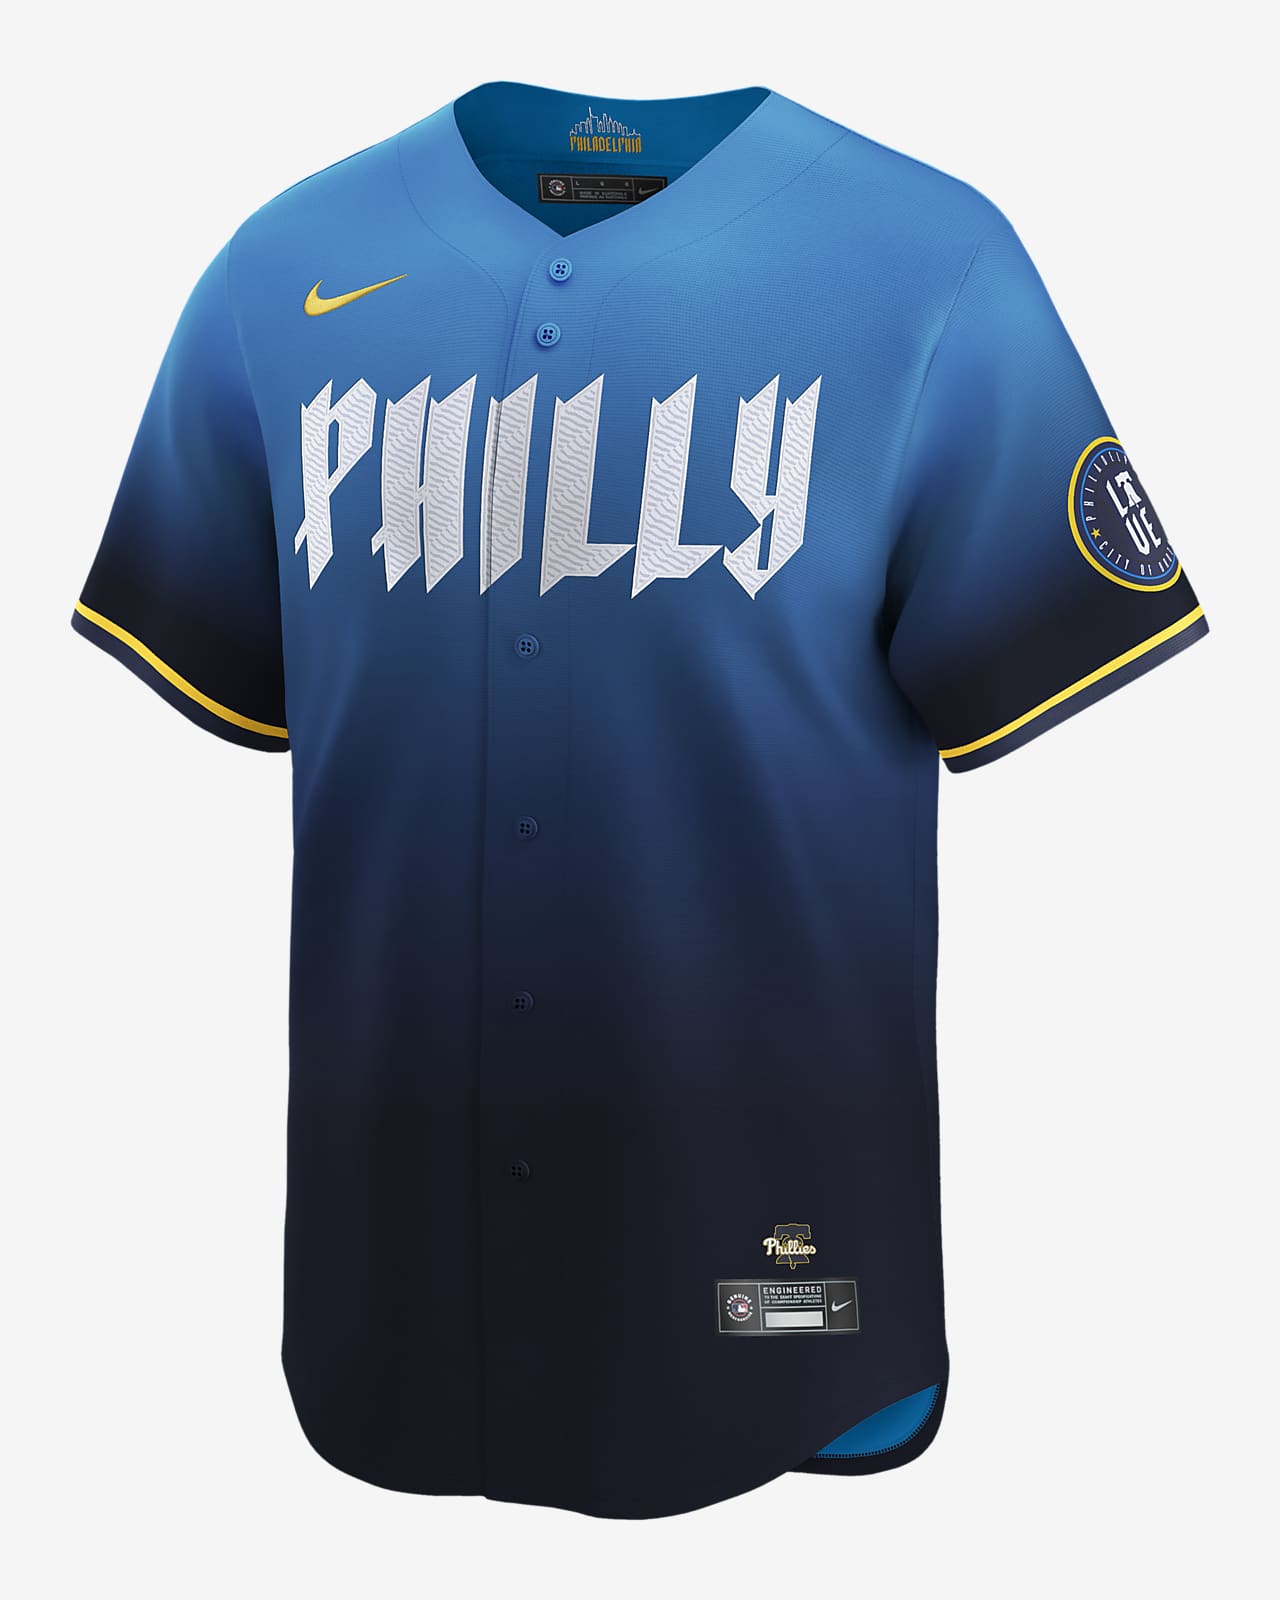 Trea Turner Philadelphia Phillies City Connect Men's Nike Dri-FIT ADV MLB Limited Jersey